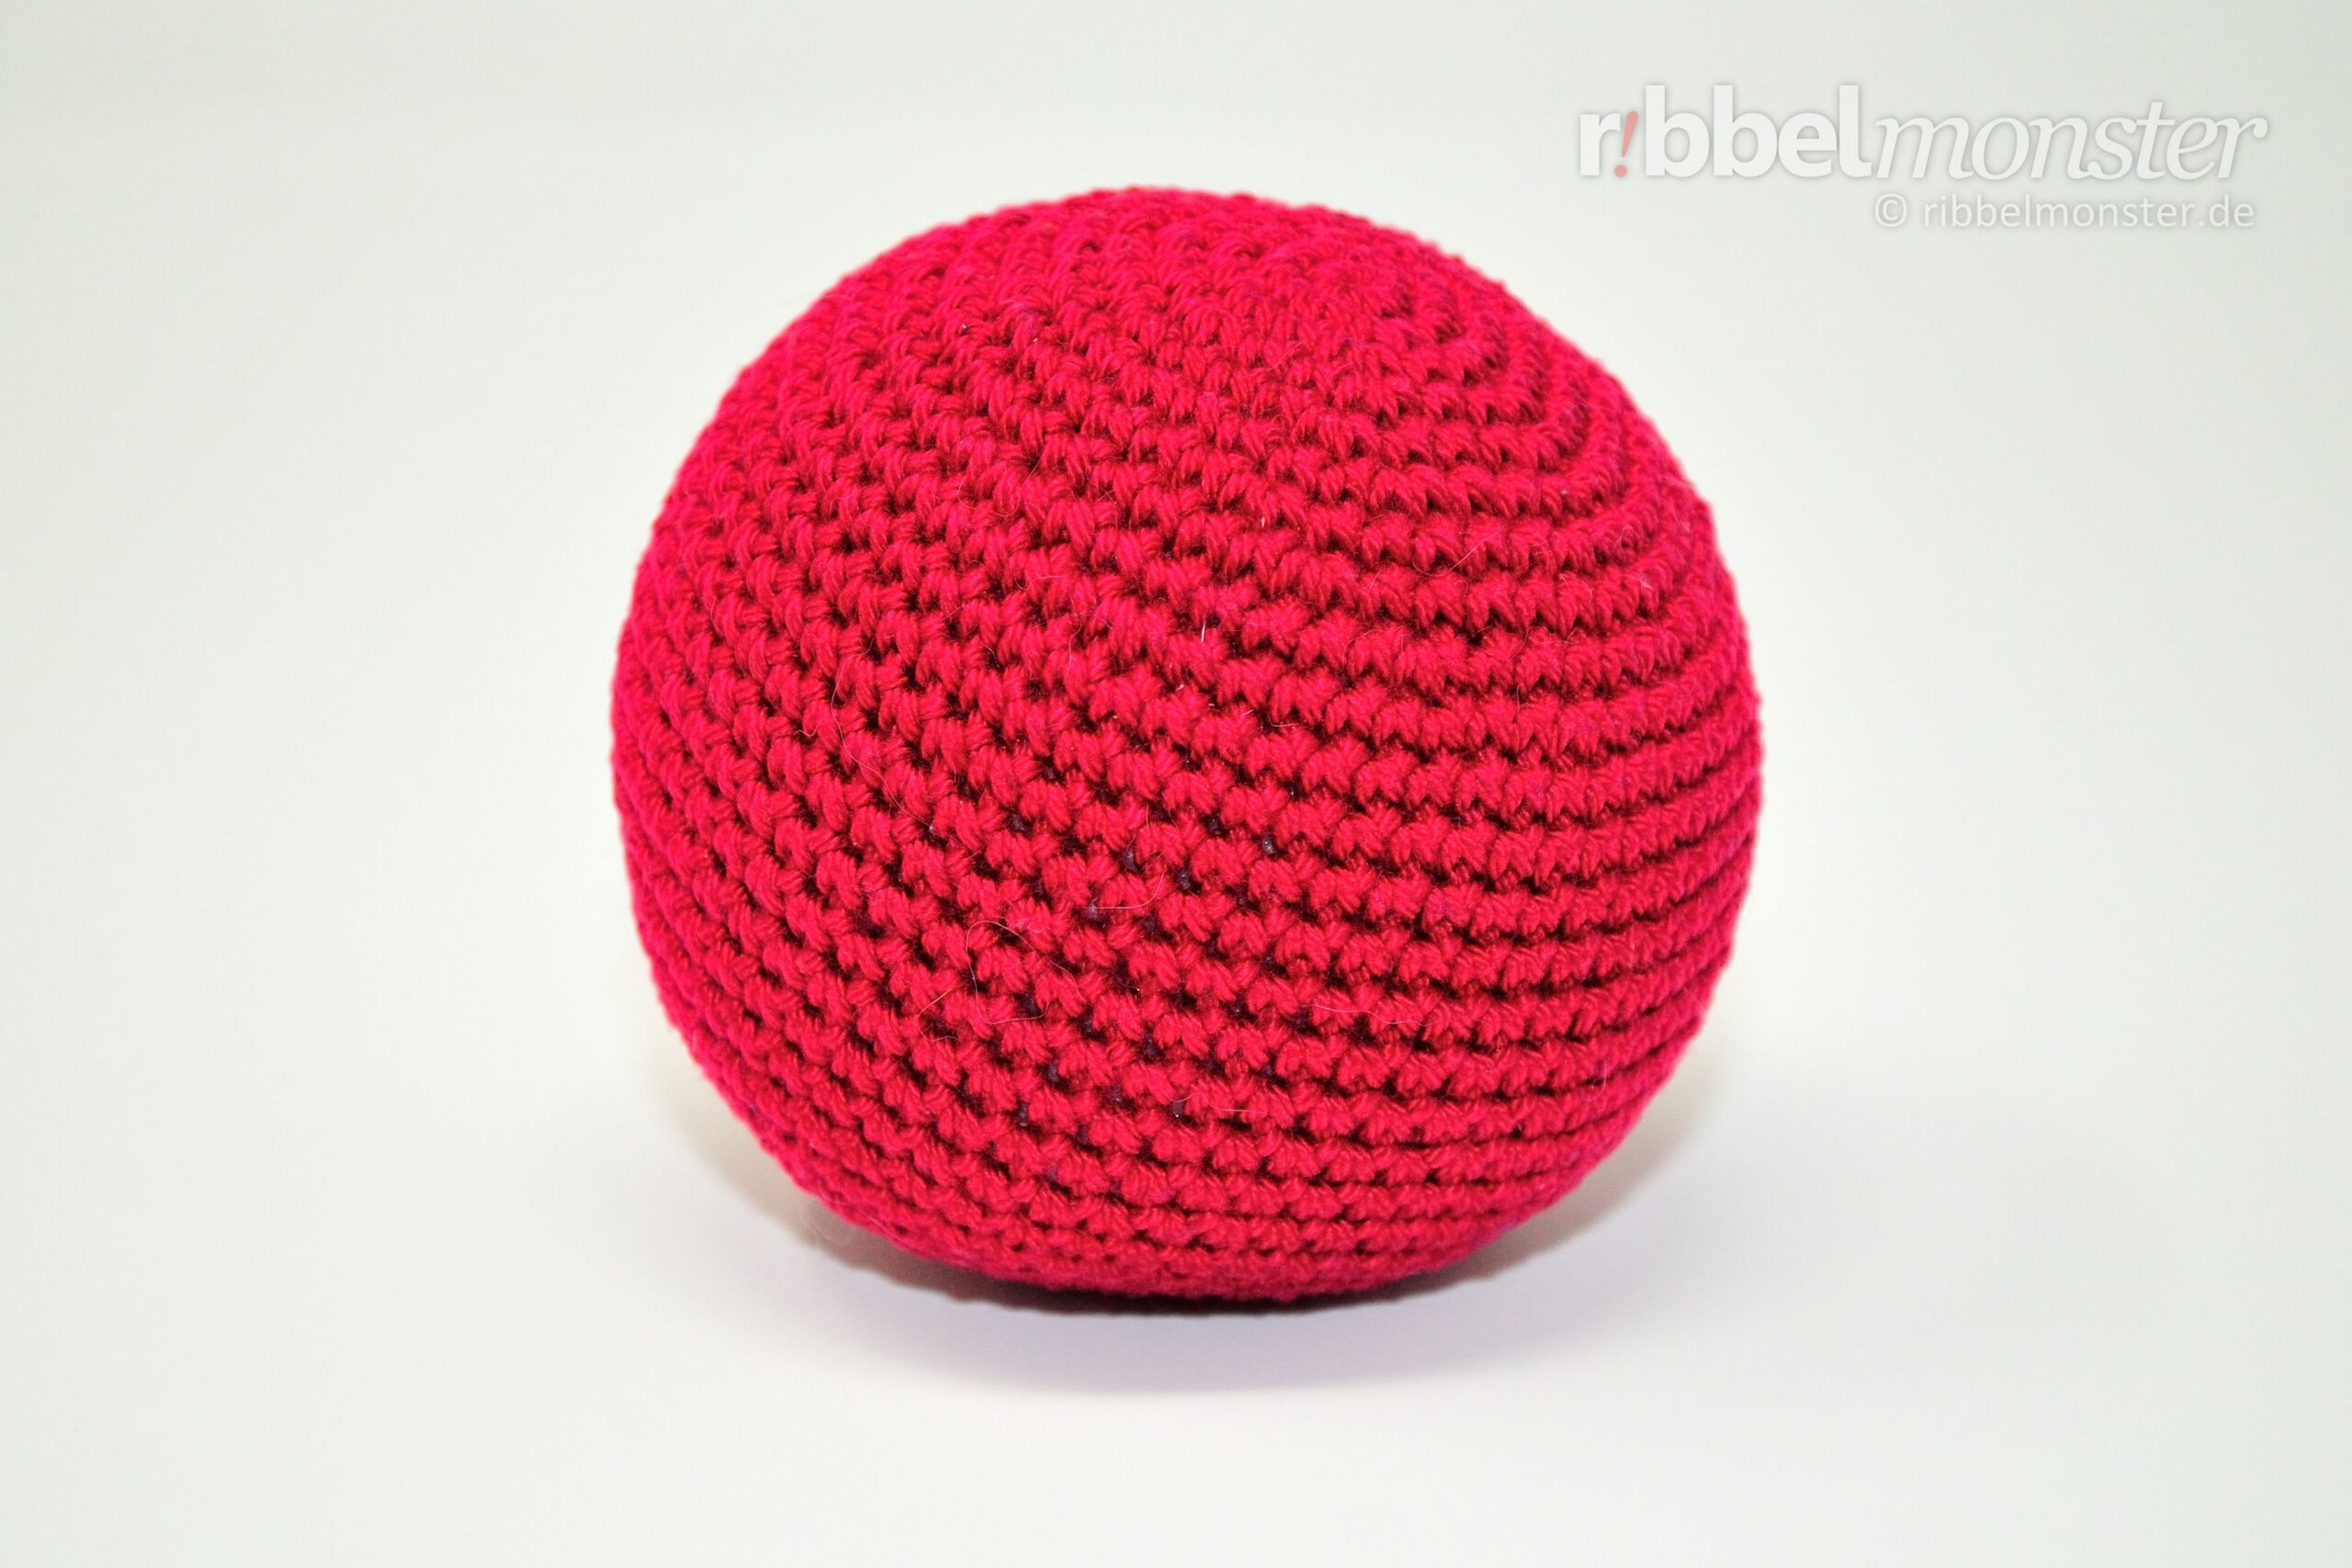 Amigurumi – einfachen größten Ball häkeln